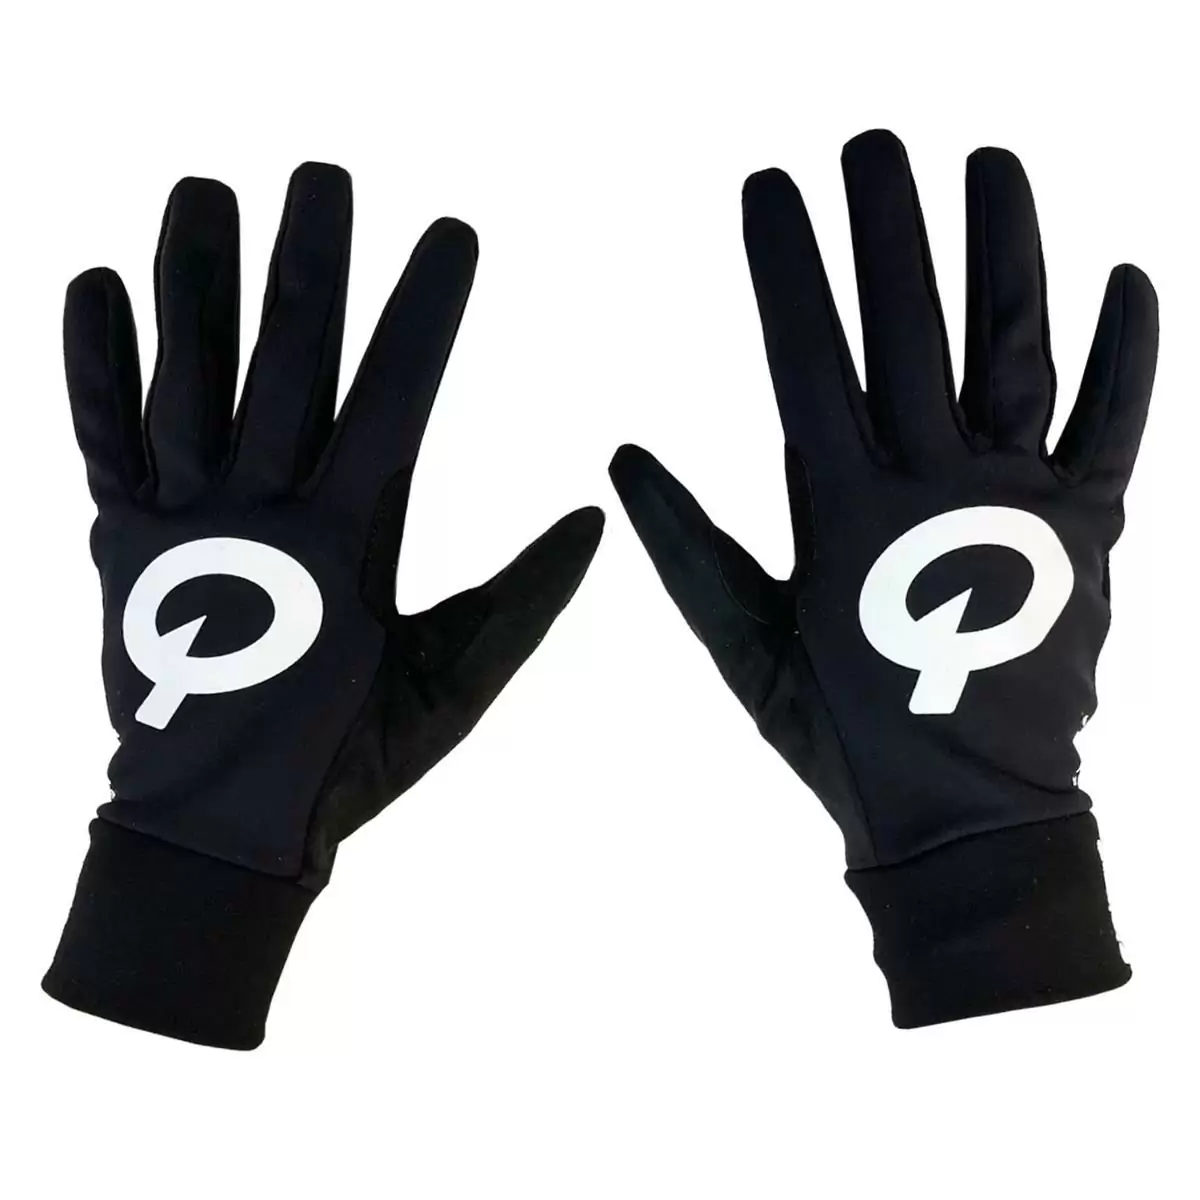 Kylma Long Finger Winter Gloves Black Size S - image